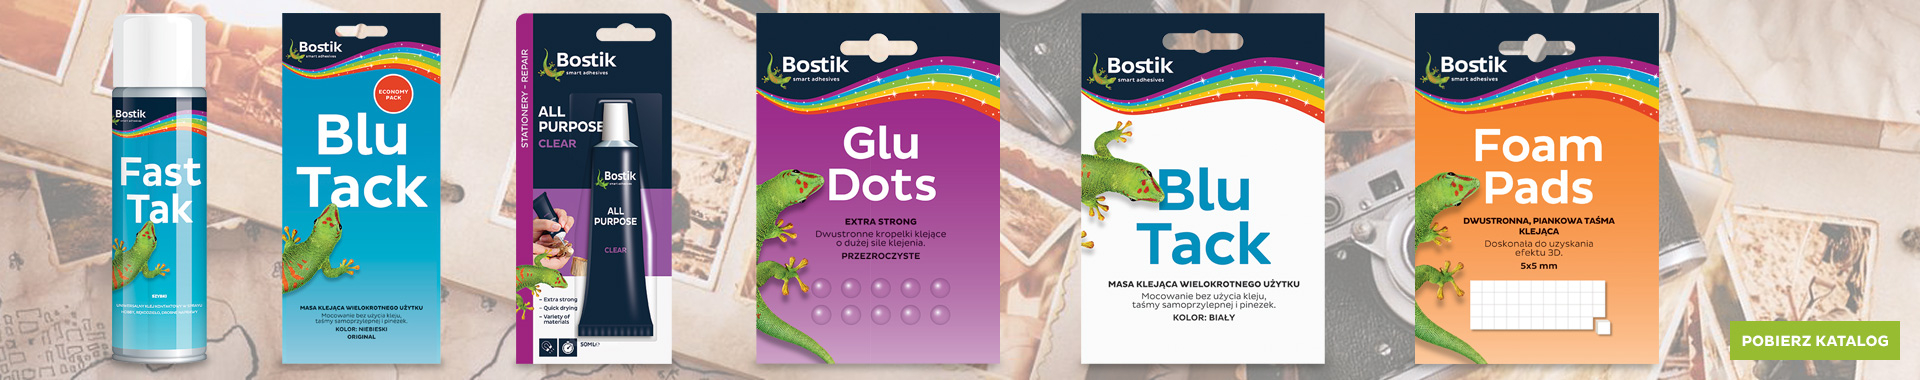 Bostik DIY Poland Stationery range banner image